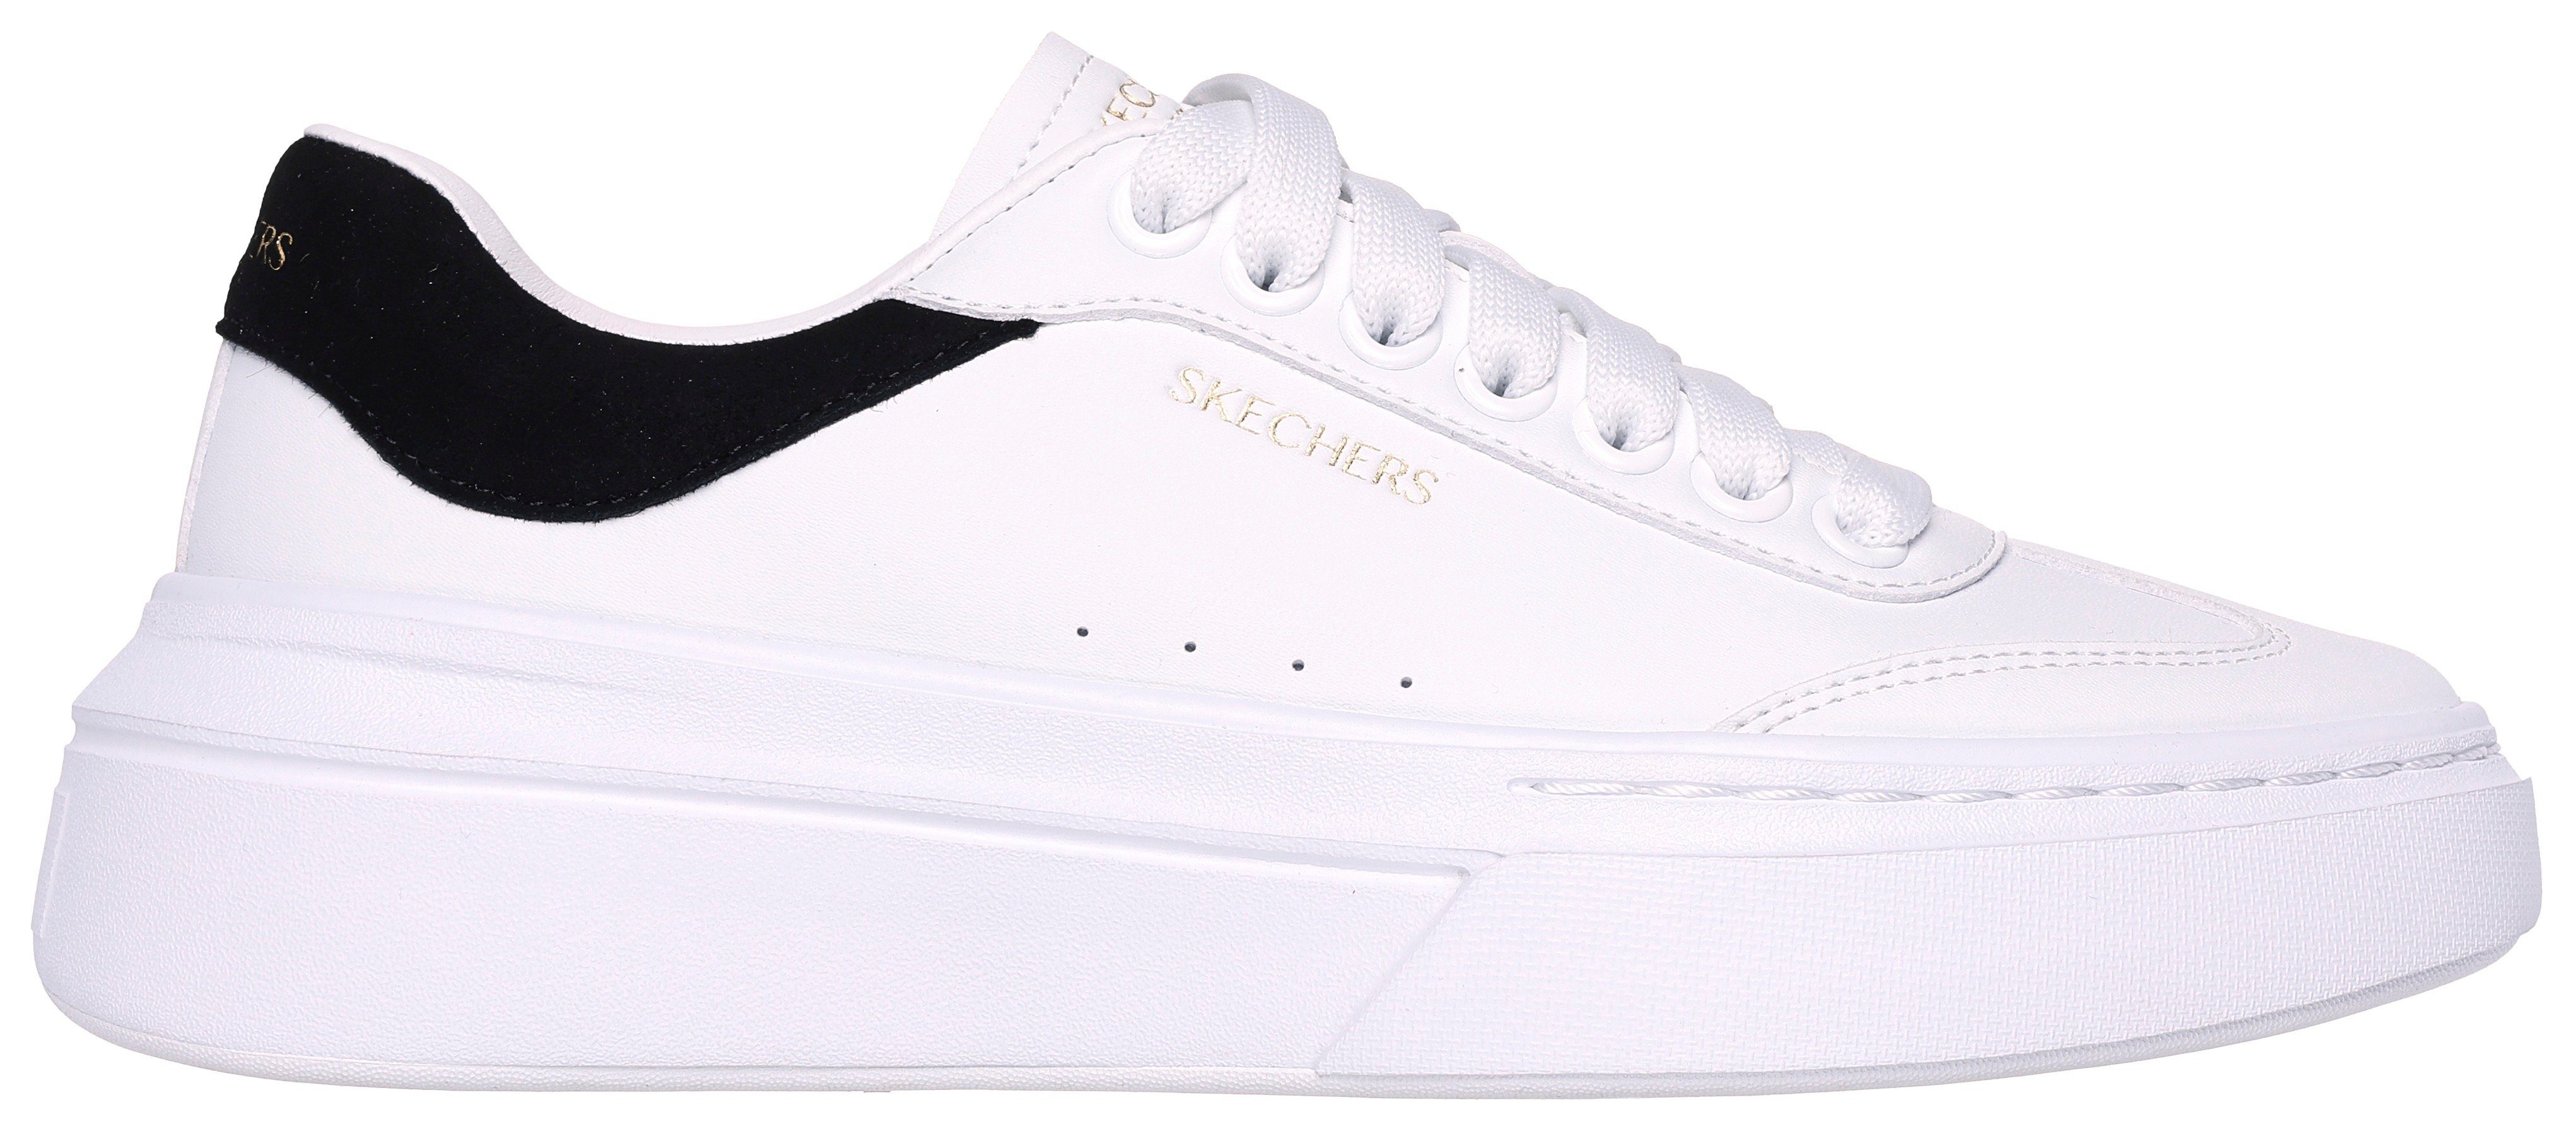 Skechers CORDOVA Kontrastbesatz mit CLASSIC- Sneaker (20203204) white/black